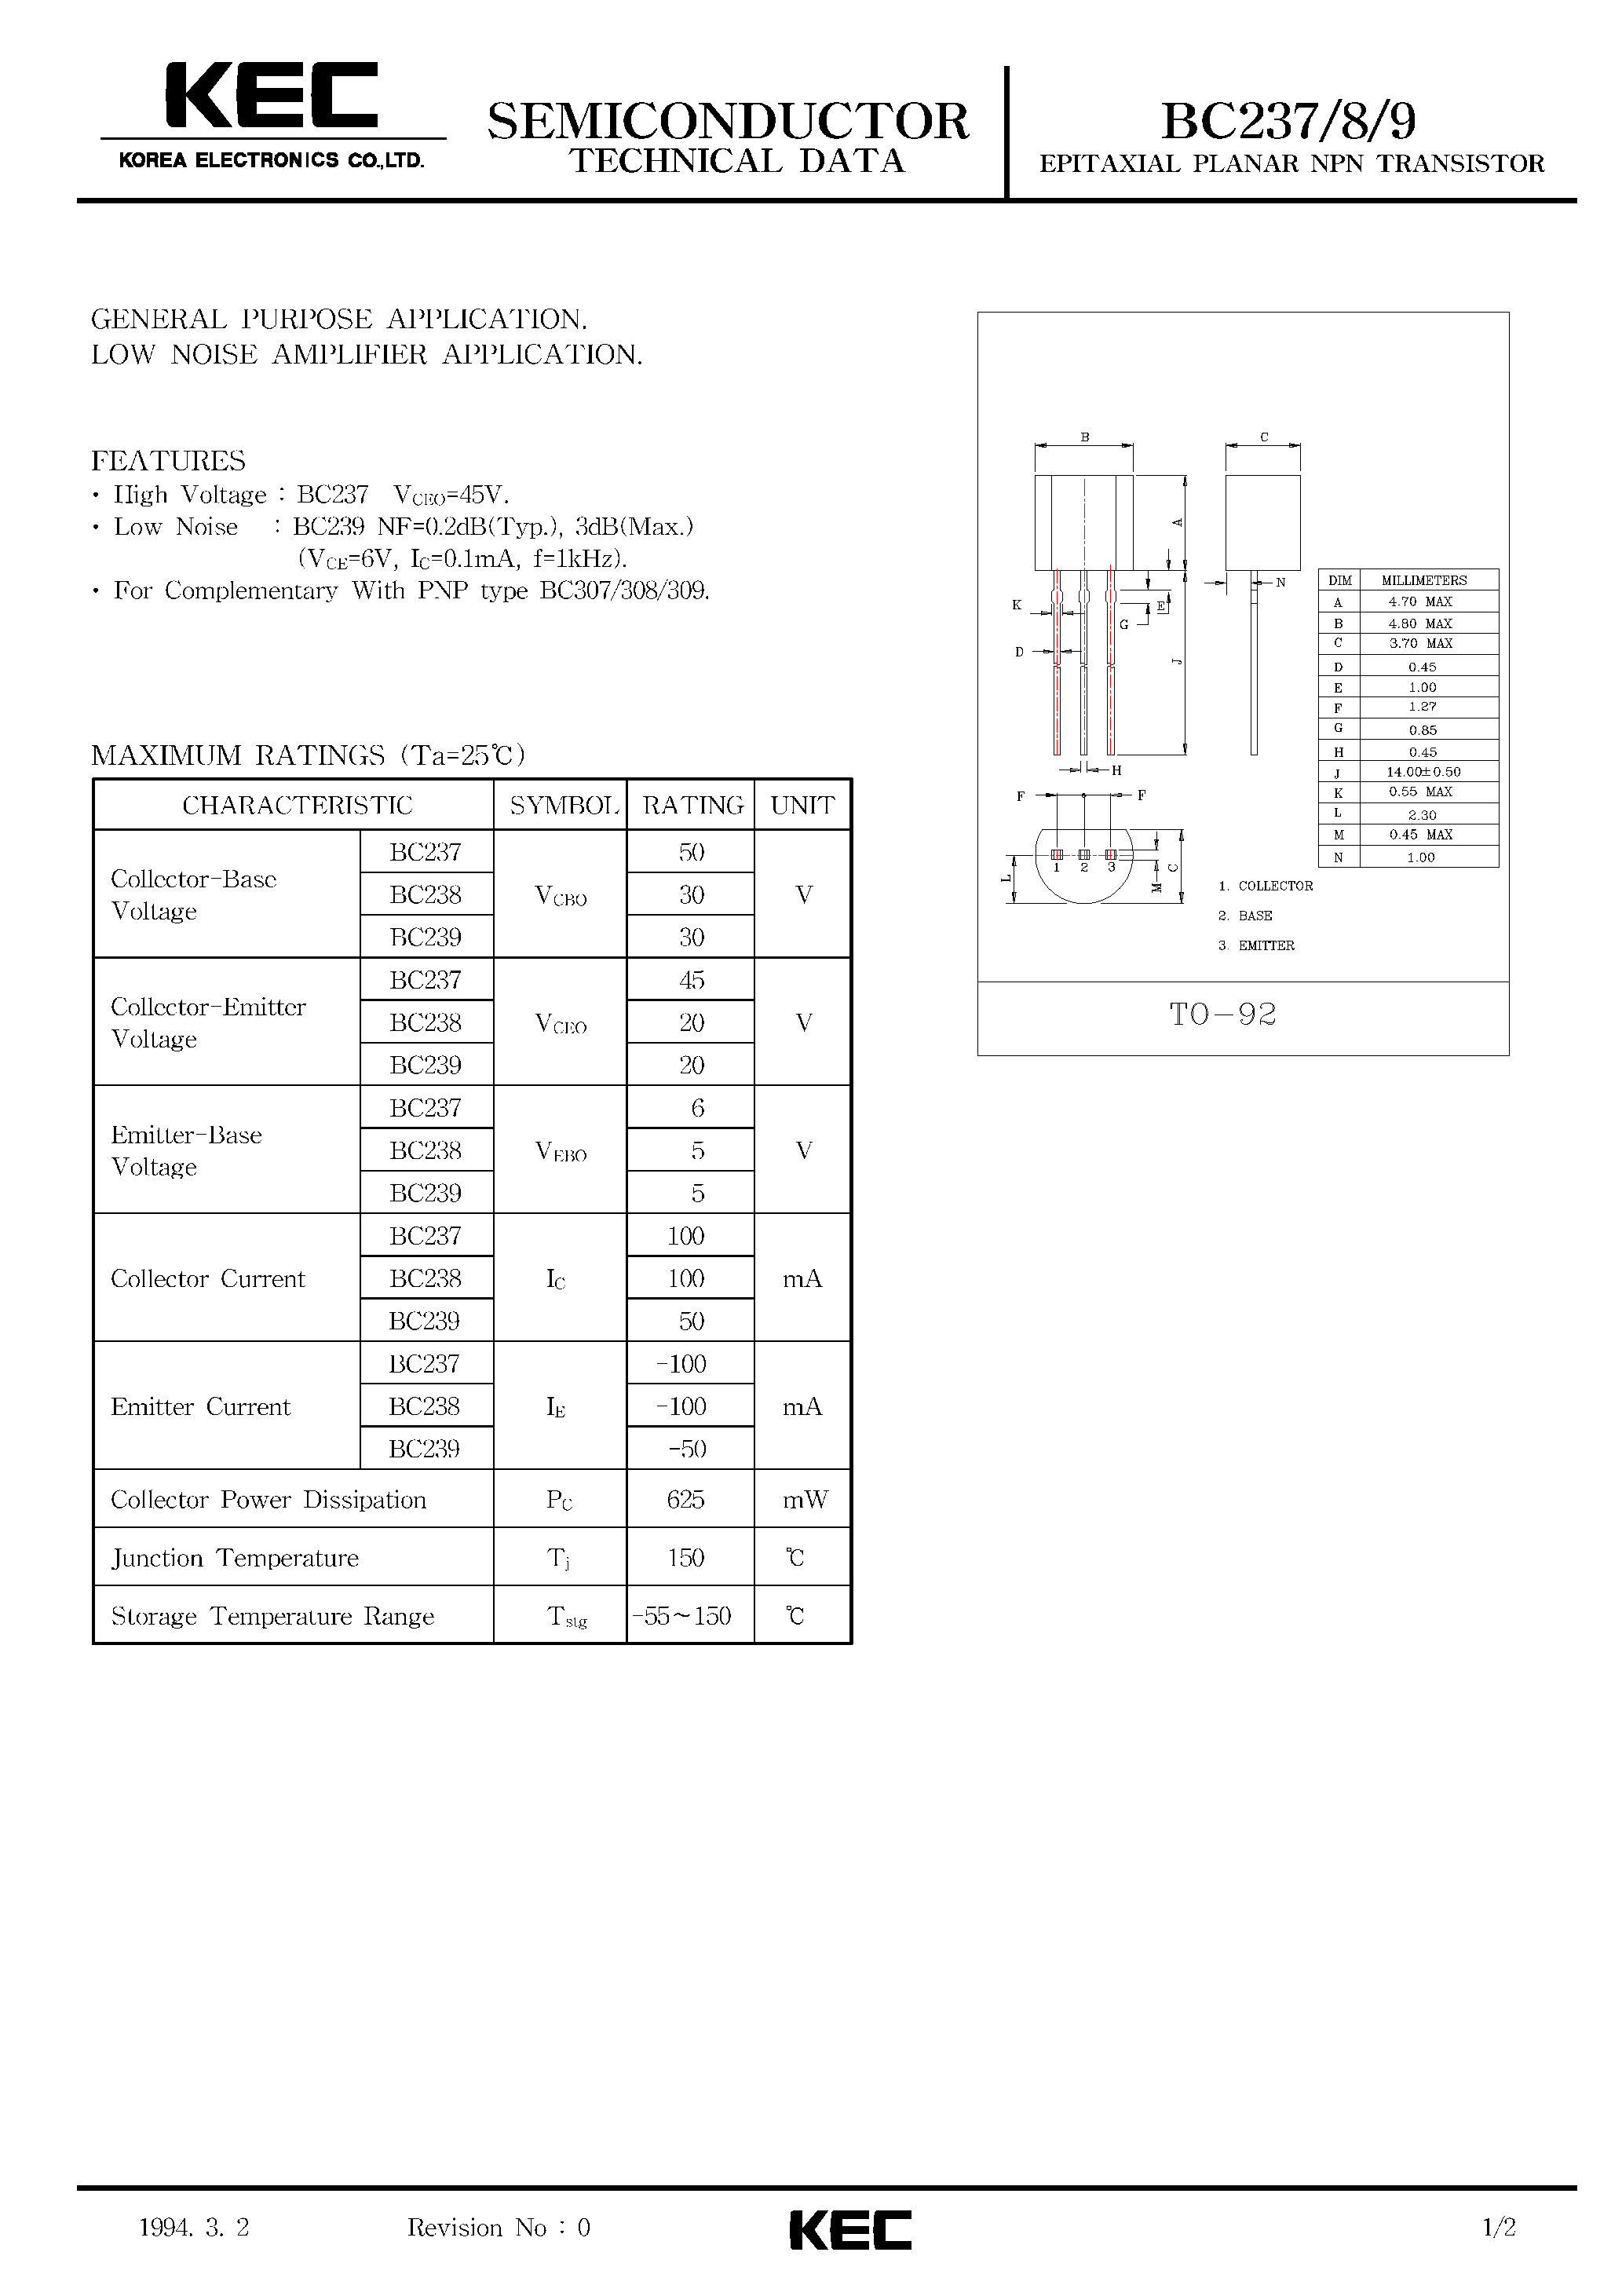 Datasheet BC237 - EPITAXIAL PLANAR NPN TRANSISTOR (GENERAL PURPOSE / LOW NOISE AMPLIFIER) page 1